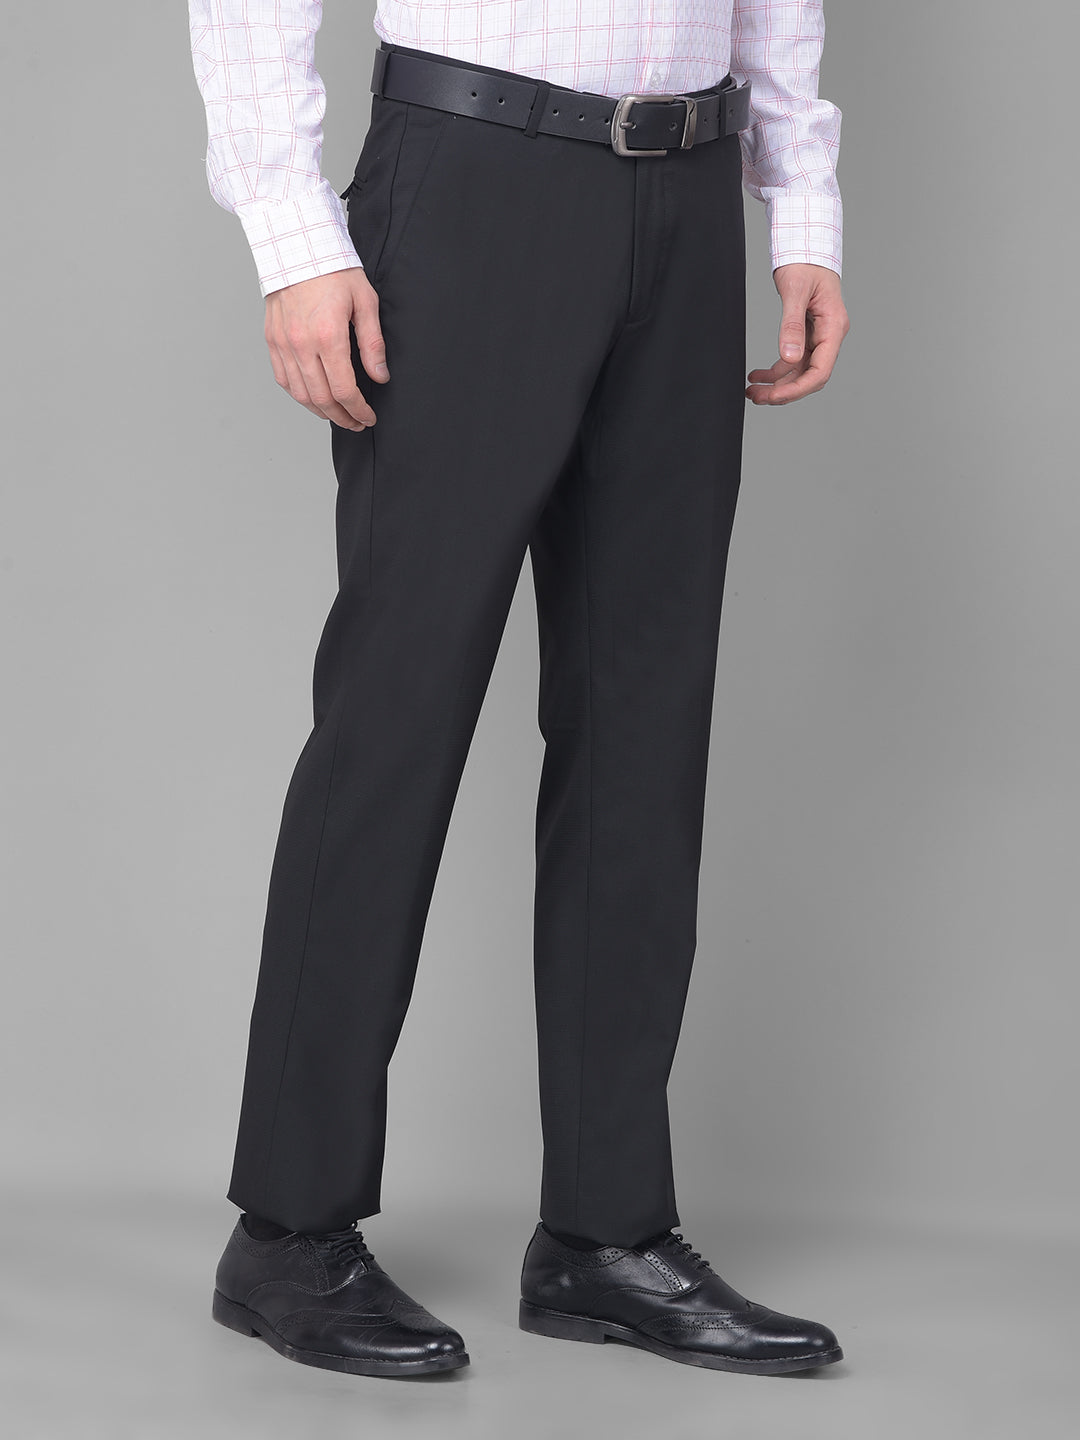 cobb black ultra fit formal trouser